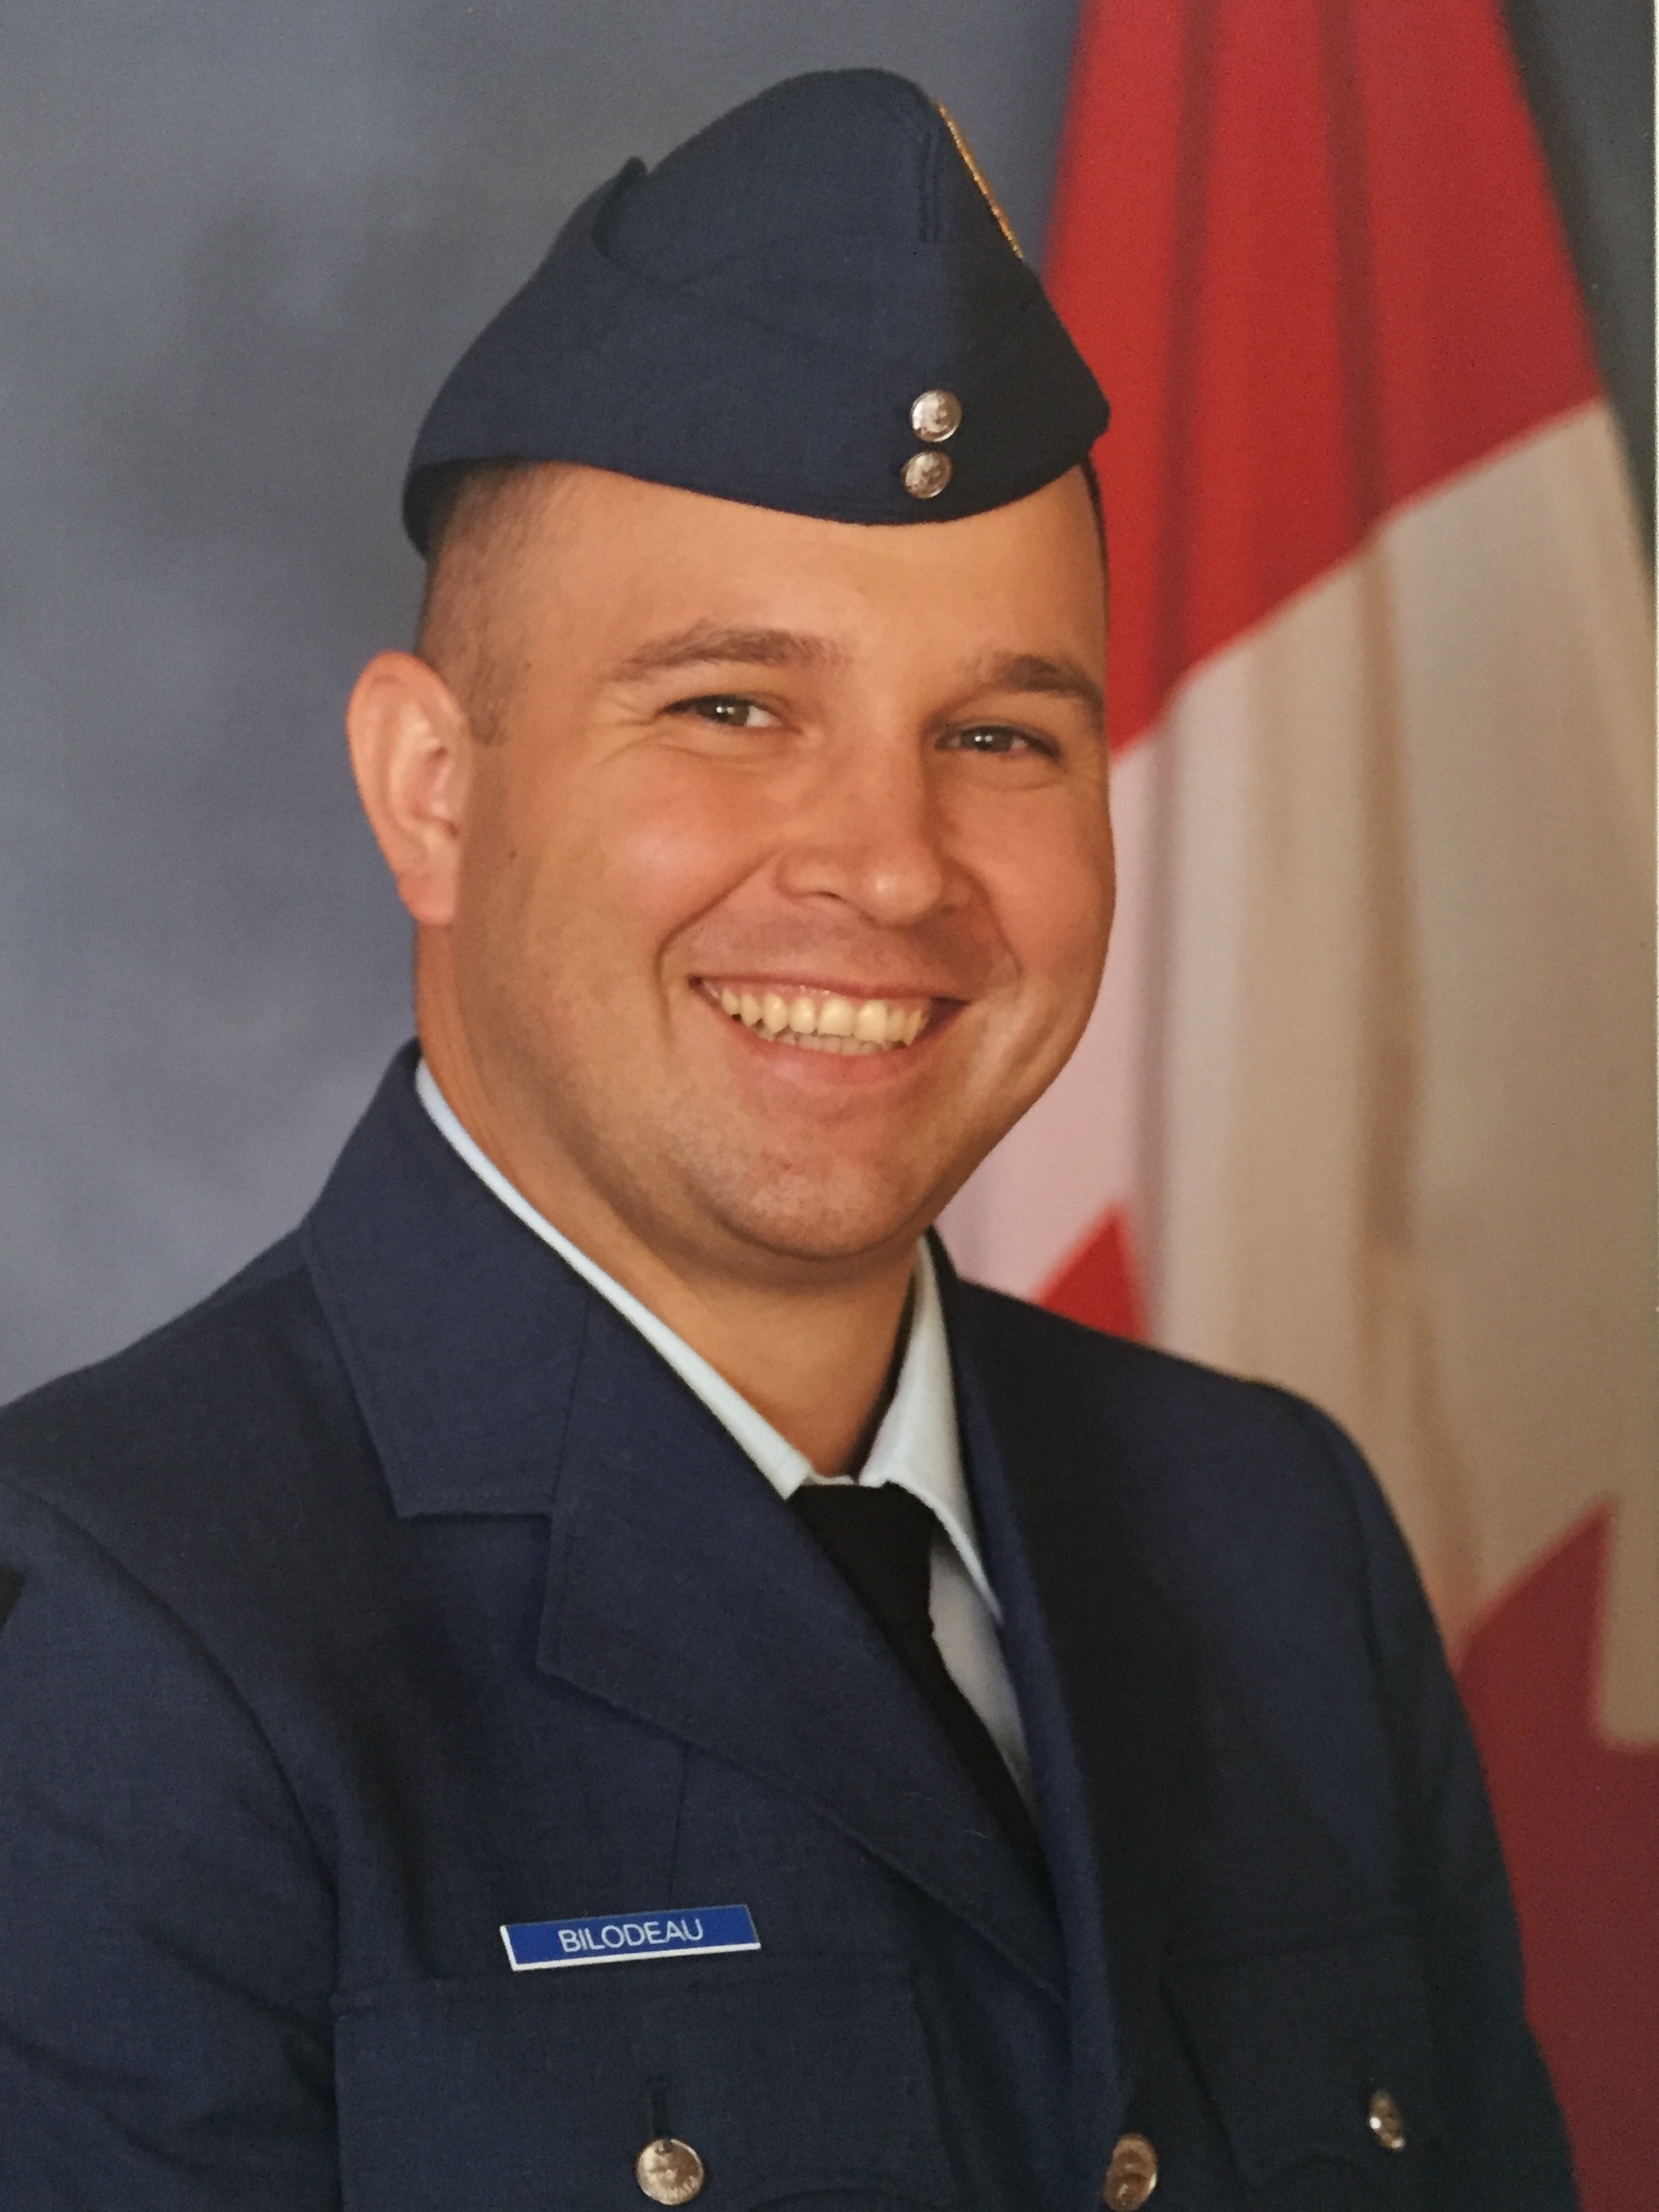 Second Lieutenant Randy Bilodeau